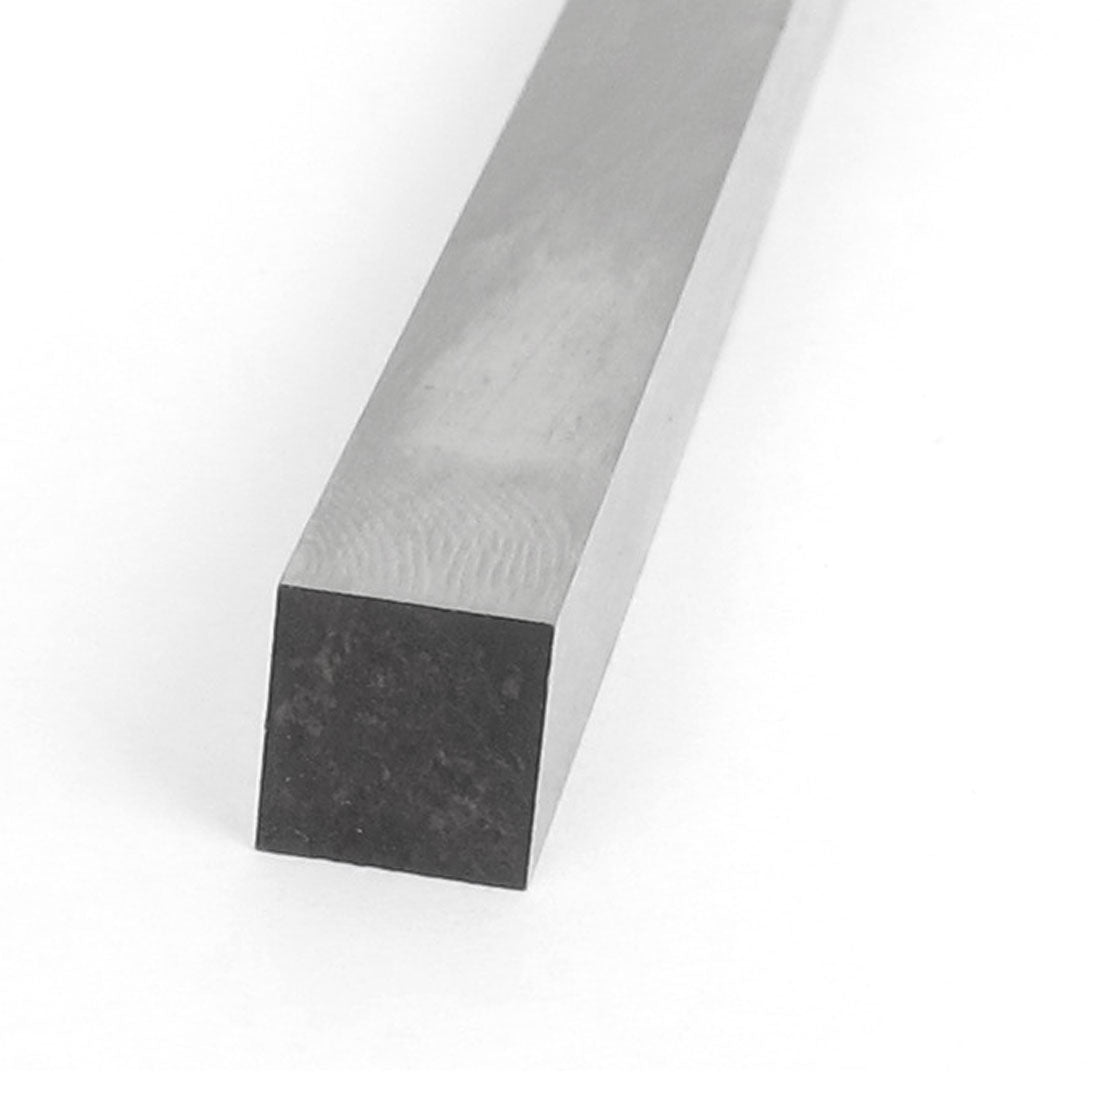 Uxcell Uxcell High Speed Steel CNC Lathe HSS Square Cutting Tool Bits Bar 8x8x200mm 6pcs